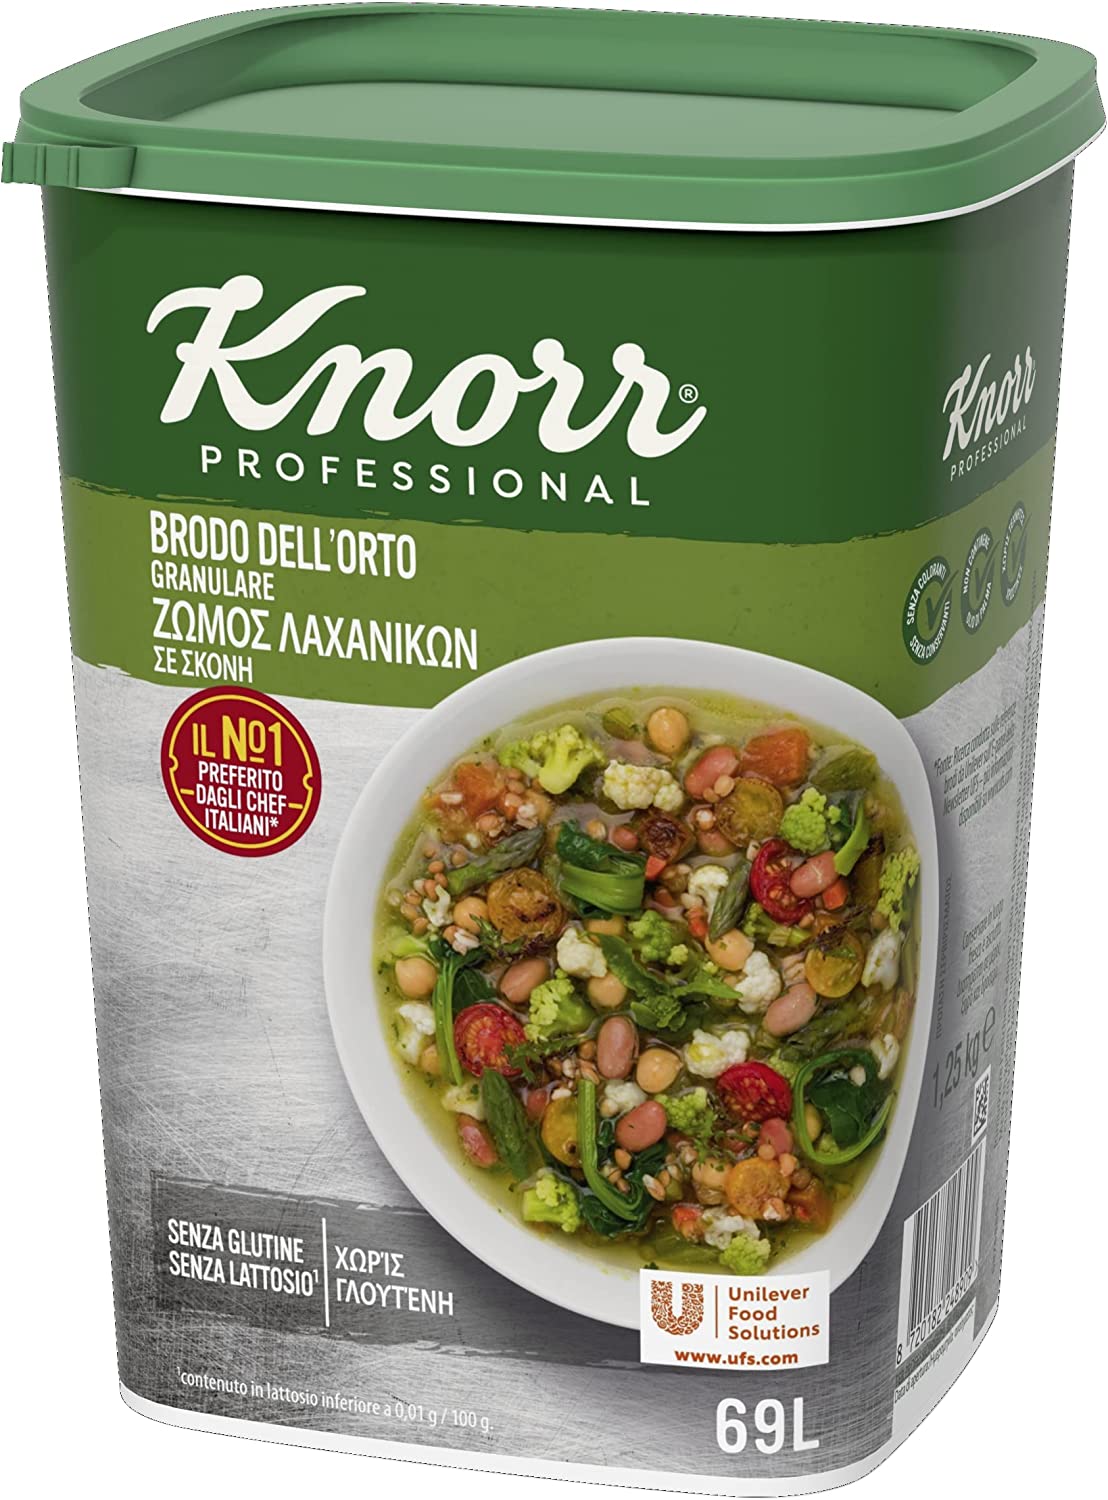 Brodo dell’orto Granulare Knorr 1kg